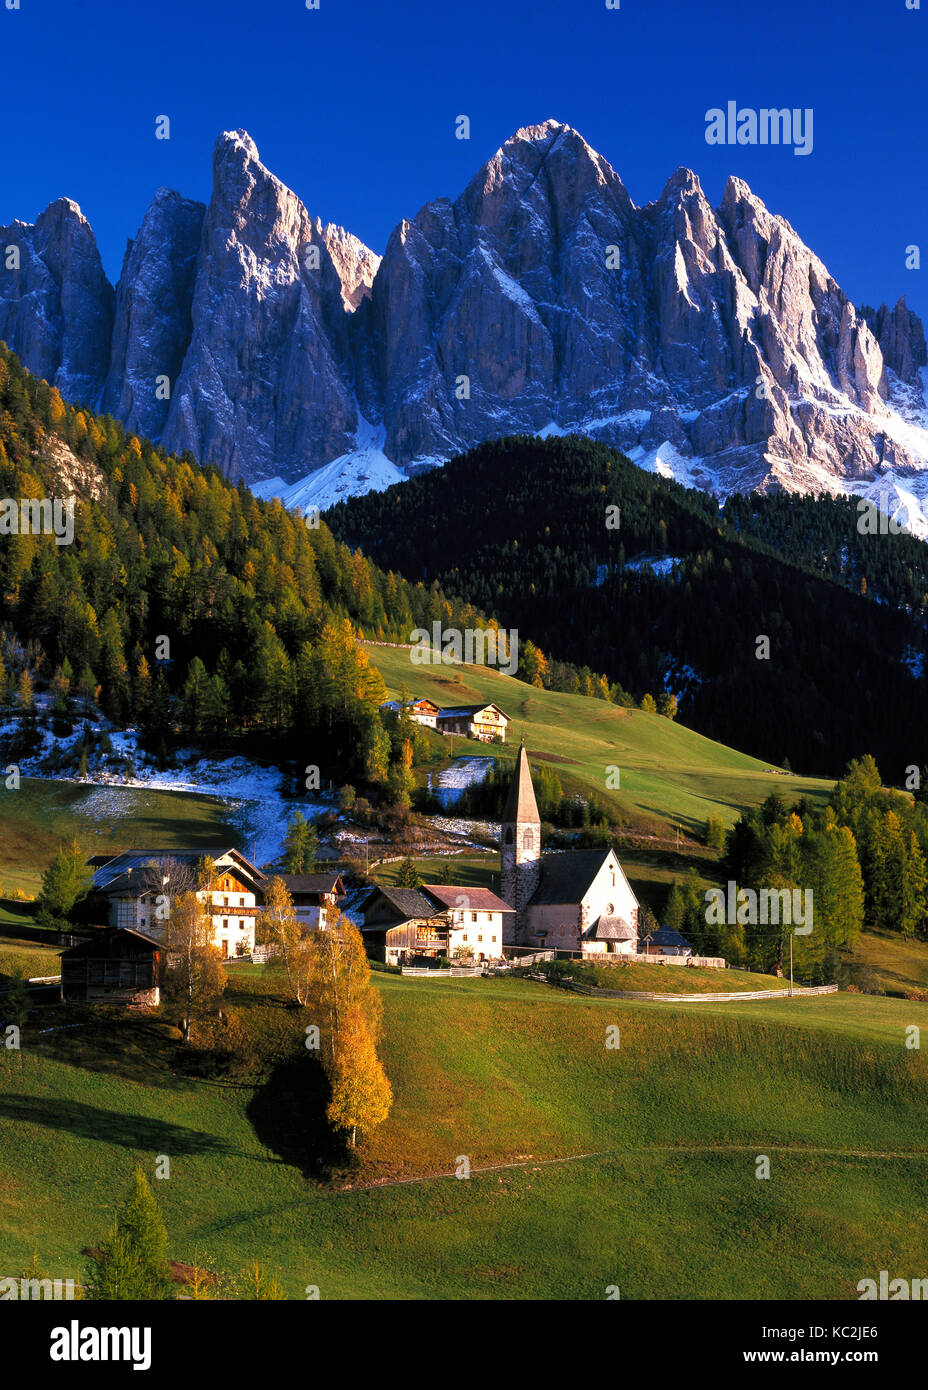 St. Magdalena and the Geisler Gruppe in the Dolomites, Italian Alps, Alto Adige, Trentino, Italy Stock Photo